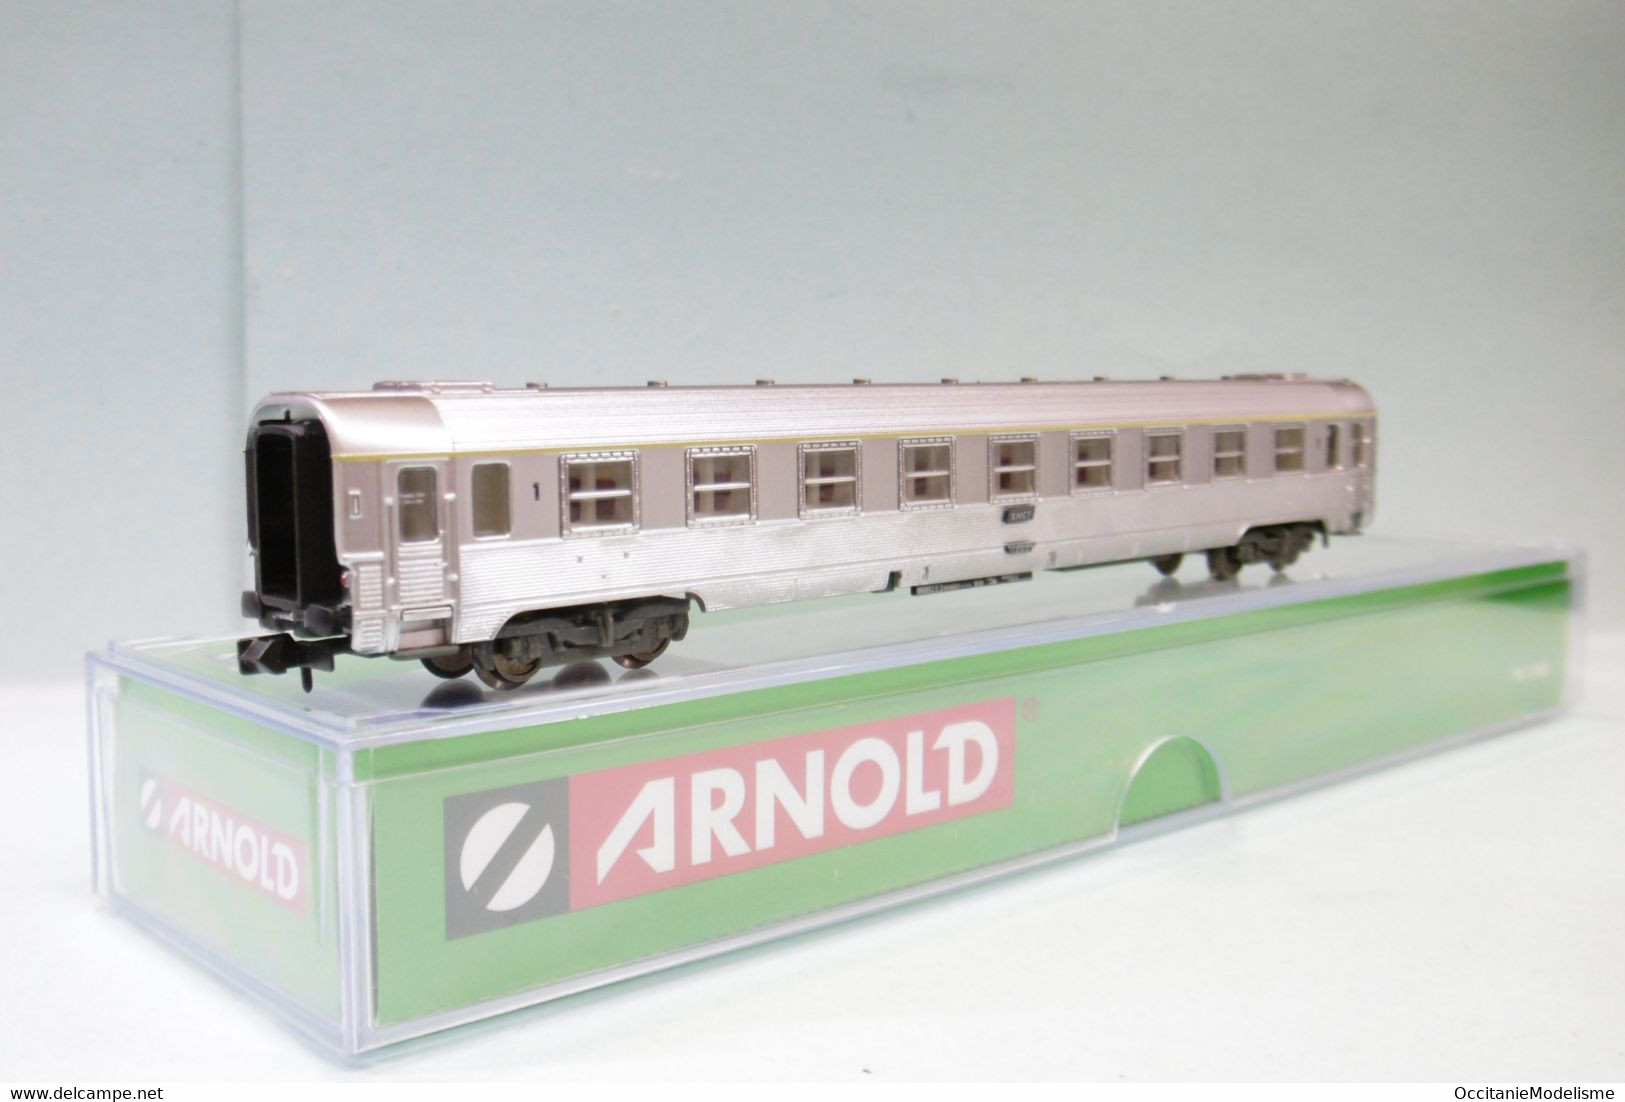 Arnold - Voiture DEV INOX A9 1ère Classe SNCF ép. IV Réf. HN4324 Neuf N 1/160 - Scompartimento Viaggiatori